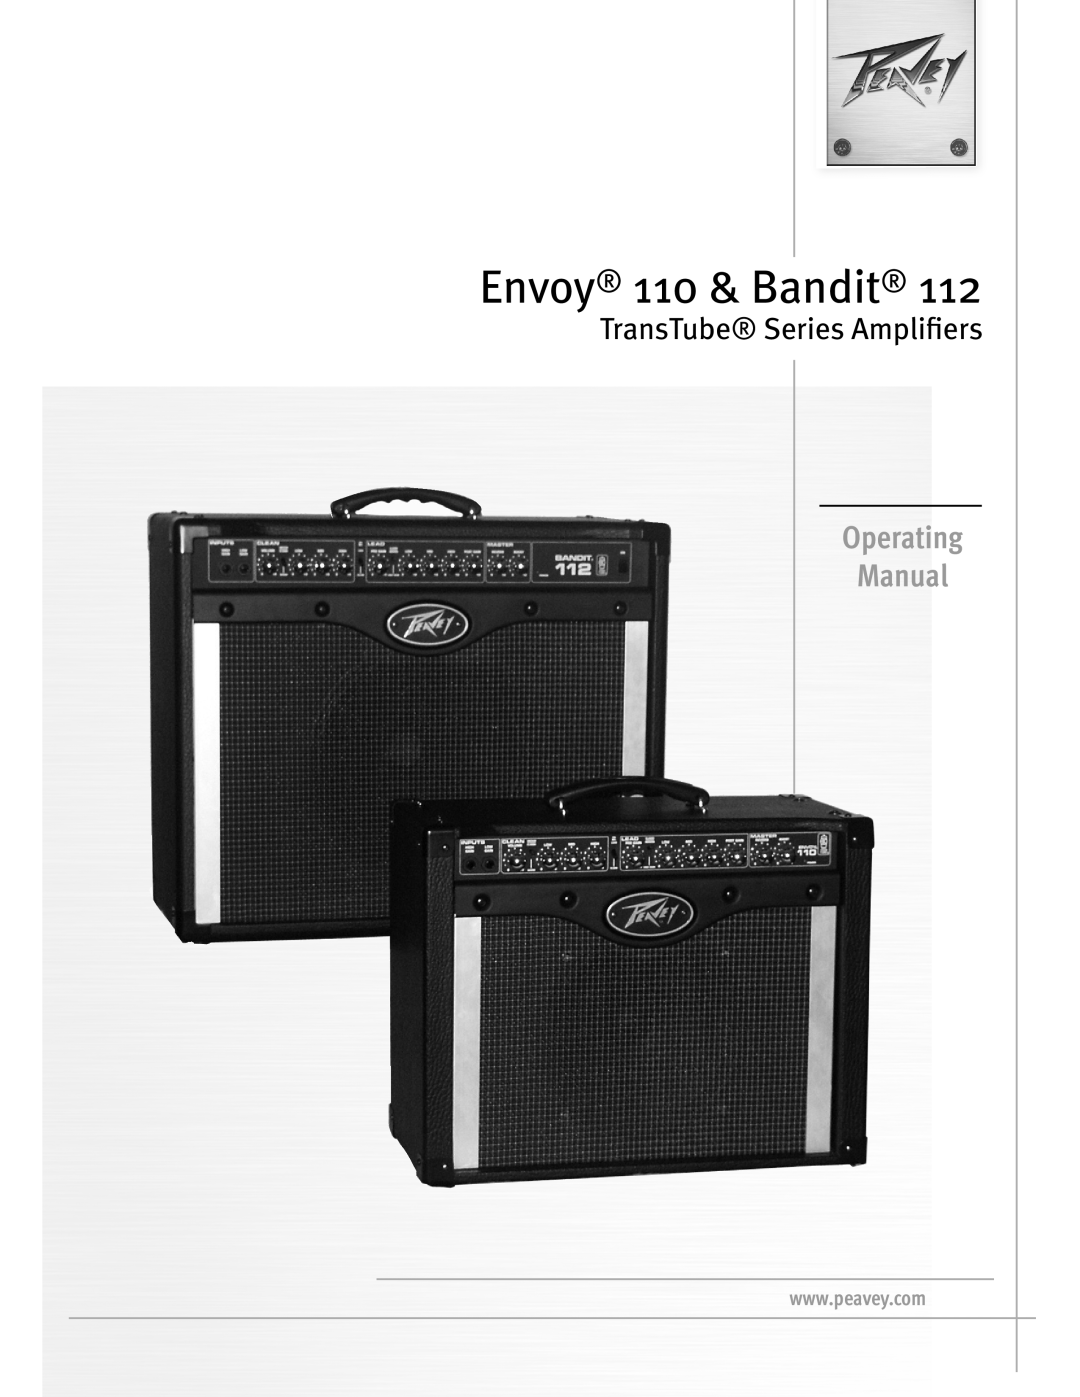 Peavey 112 manual Envoy 110 & Bandit, Operating Manual, TransTube Series Amplifiers 